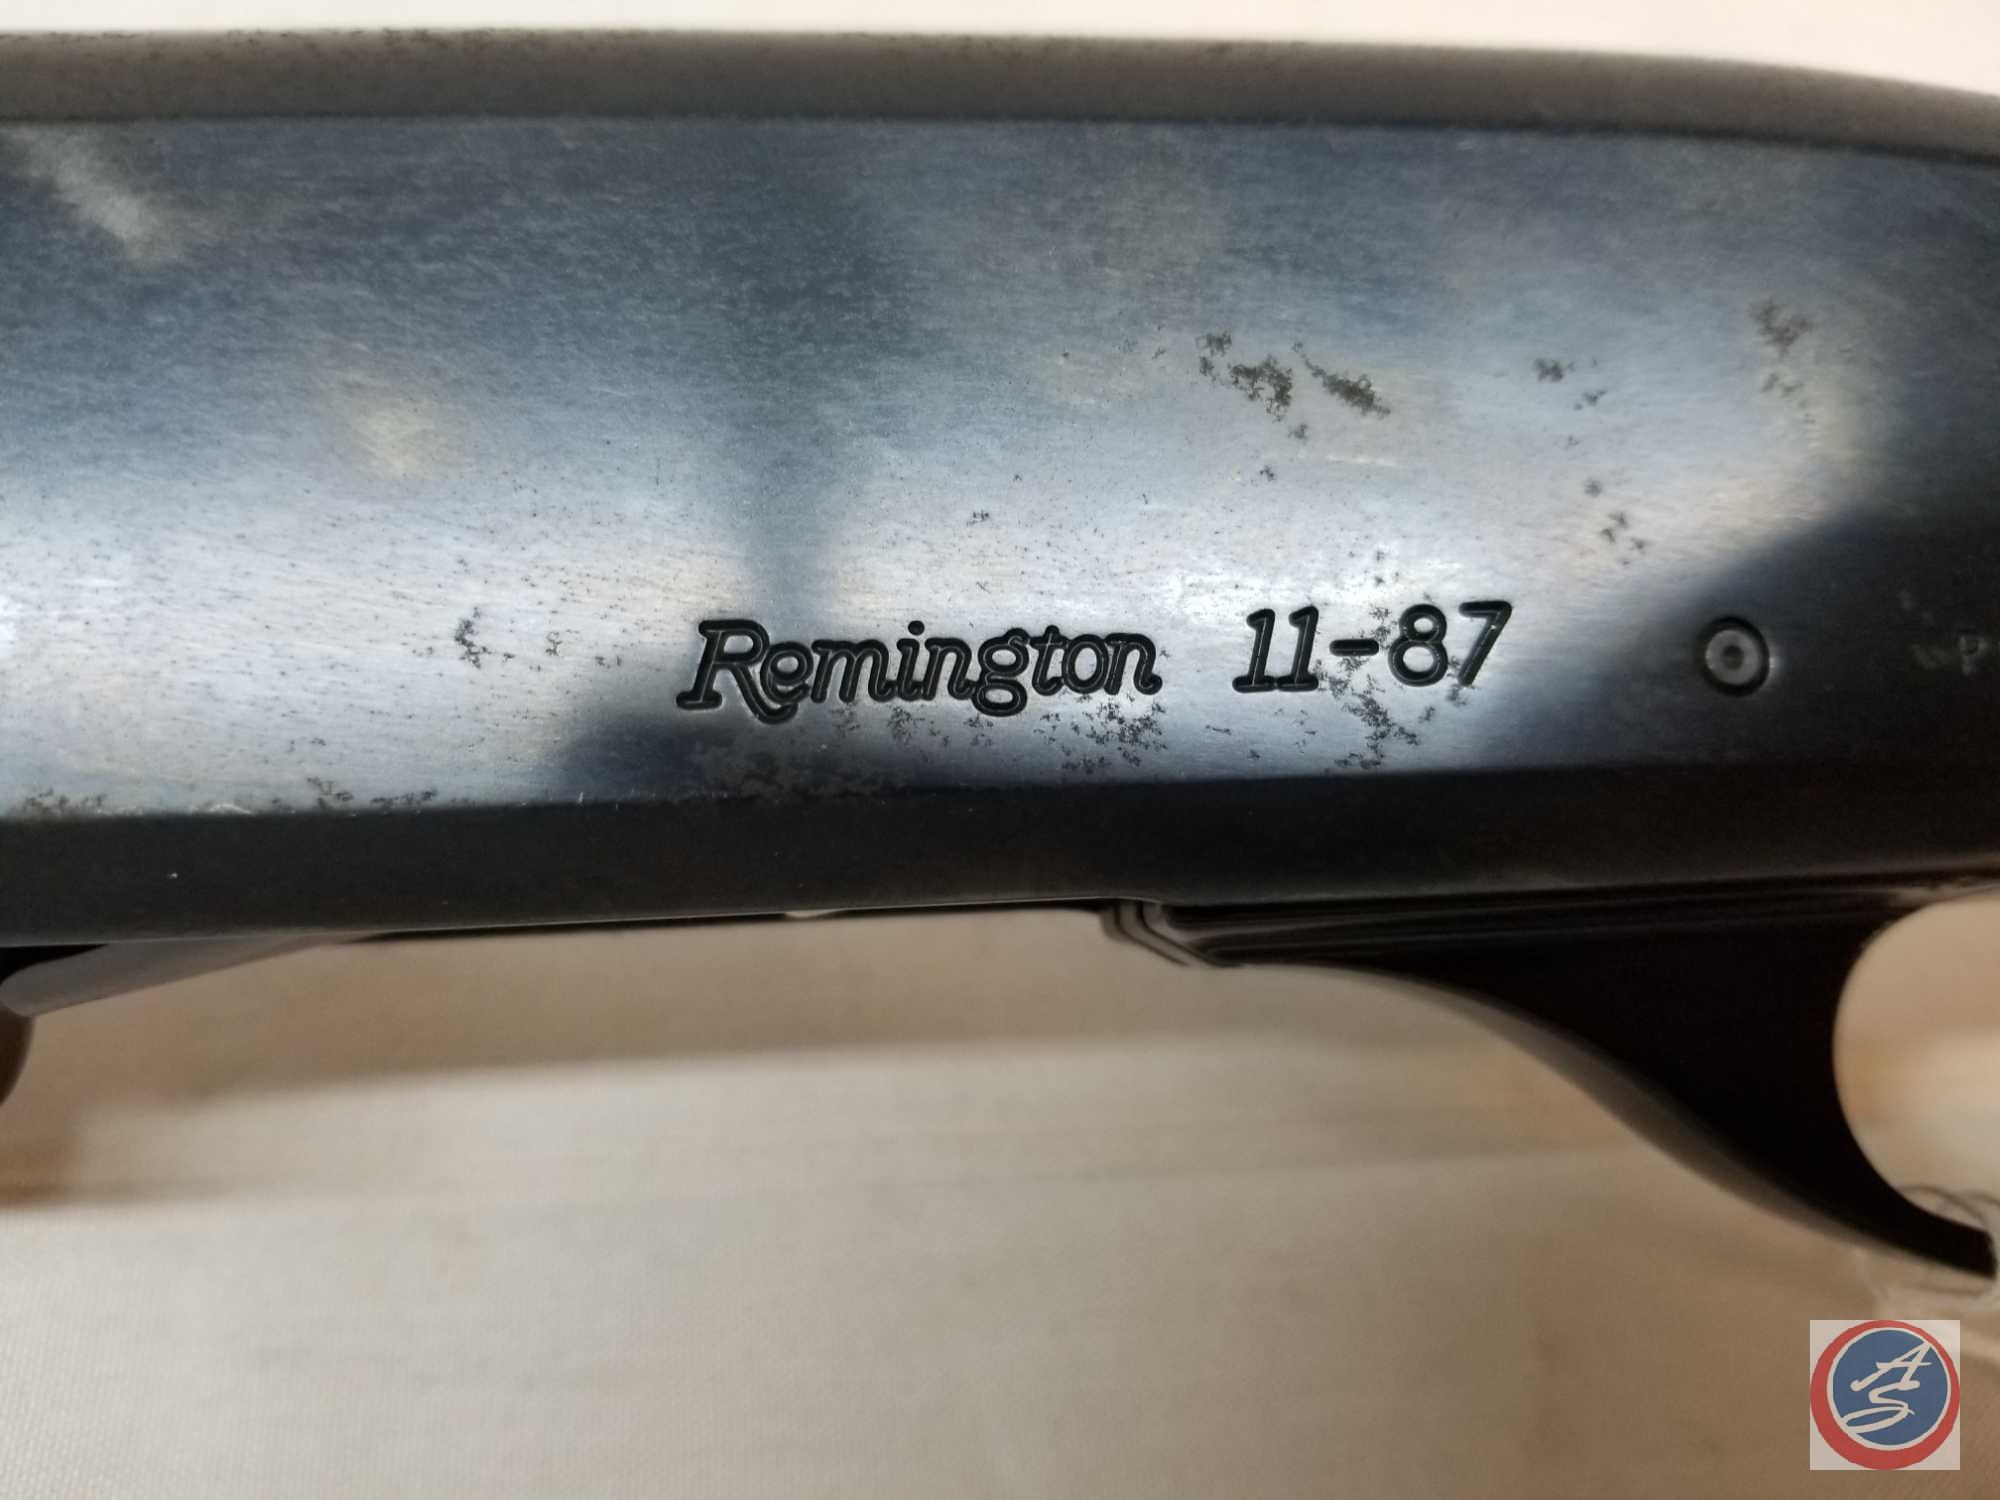 REMINGTON Model 11-87 Shotgun 12 GA 3" Semi-Auto Shotgun with 28 Inch Vent Rib Barrel in factory